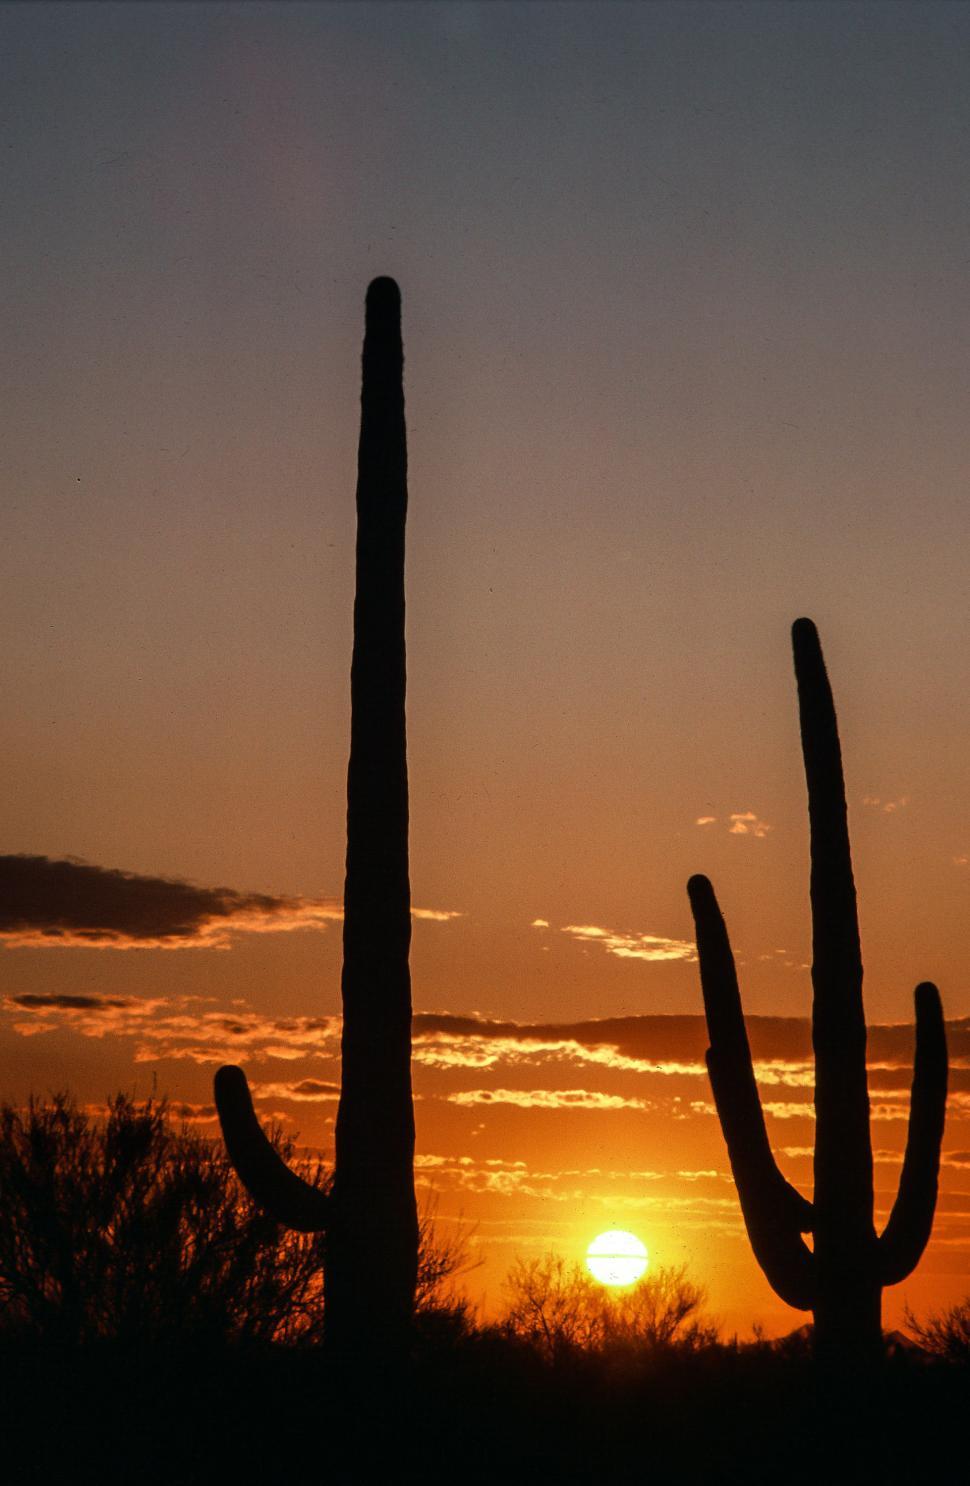 Free Image of Sunset and Saguaro Cactus 